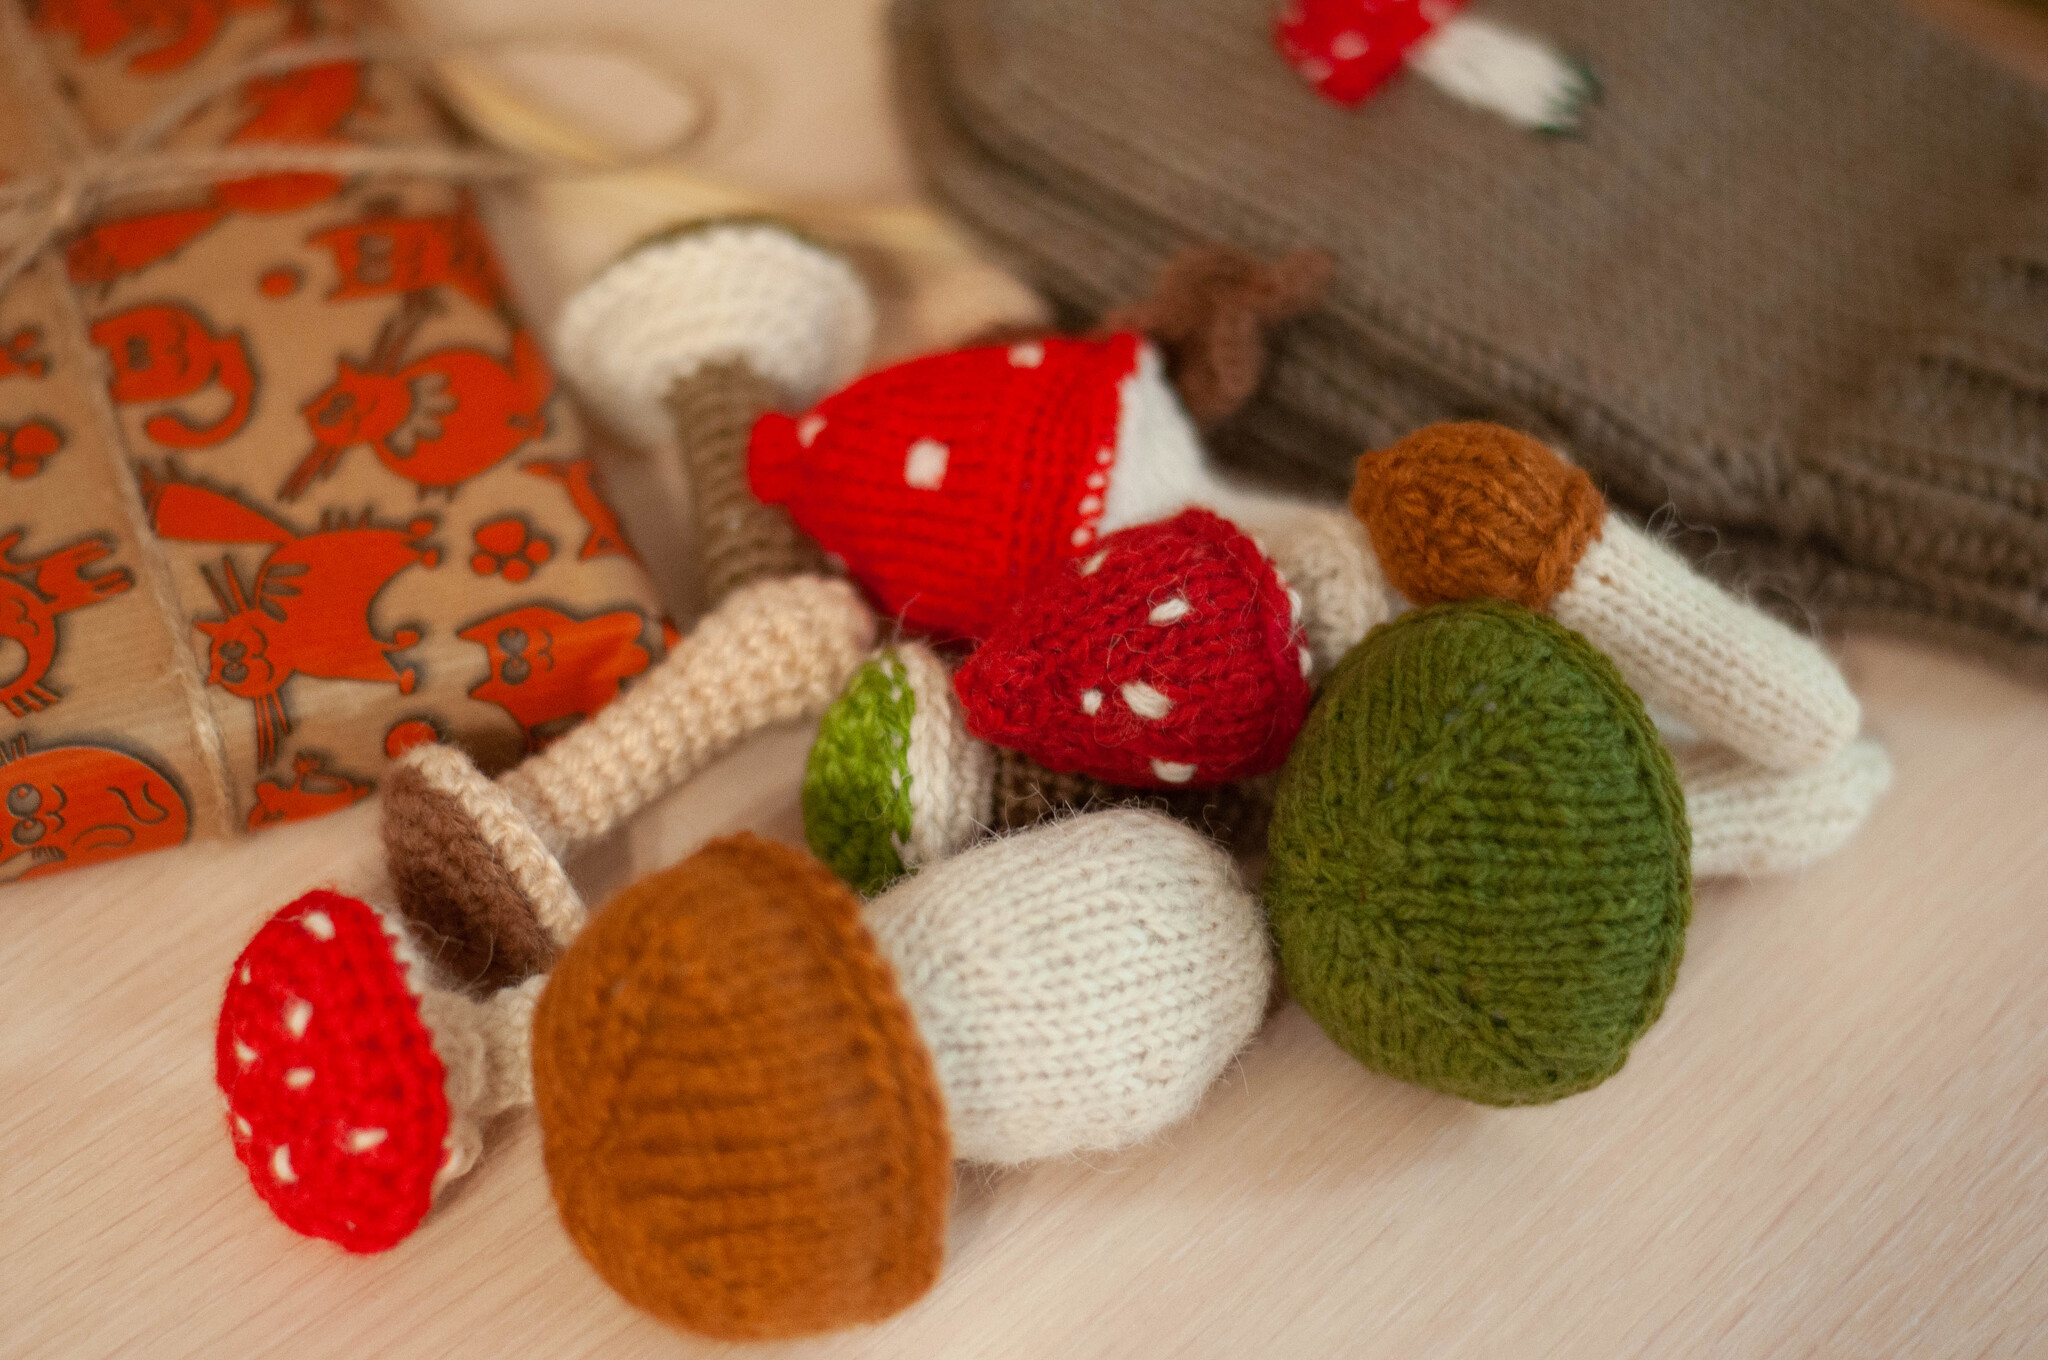 Handmade knitted decor - My, Wool toy, Decor, Interior, Needlework without process, Needlework, Handmade, Mushrooms, Knitting, Knitted toys, Crochet, Knitting